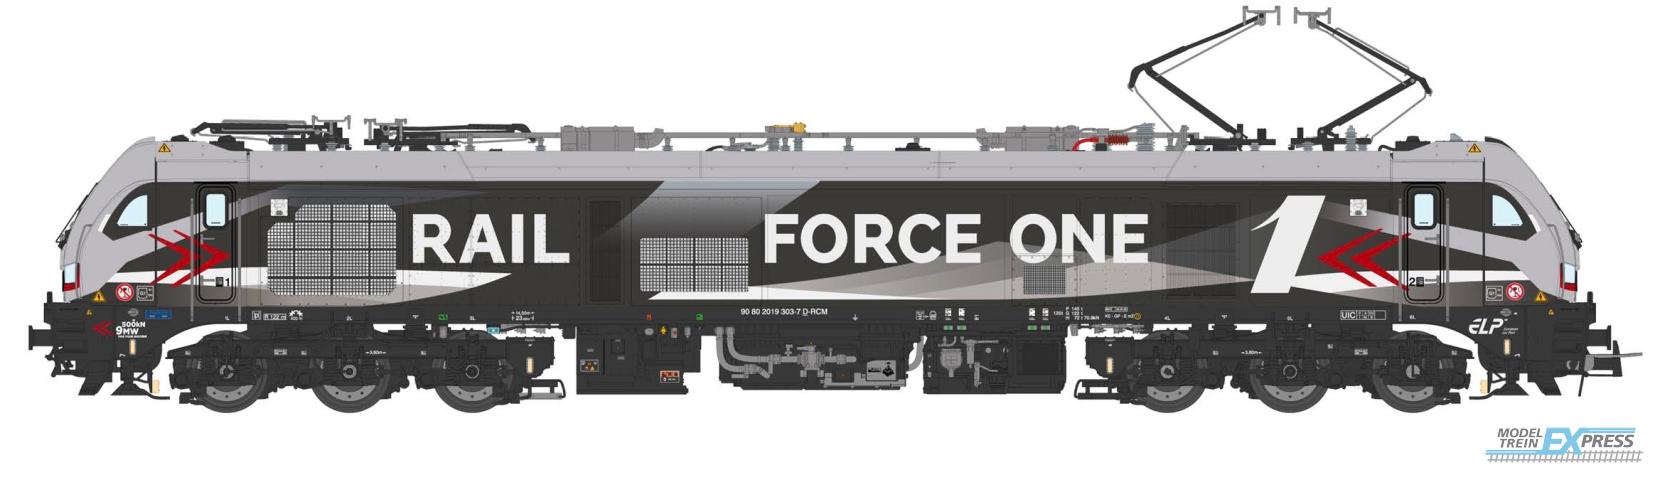 Sudexpress S0193030 Euro 9000 locomotive 2019 303-7 Rail Force One, DCC Sound + Servos (Pantos)